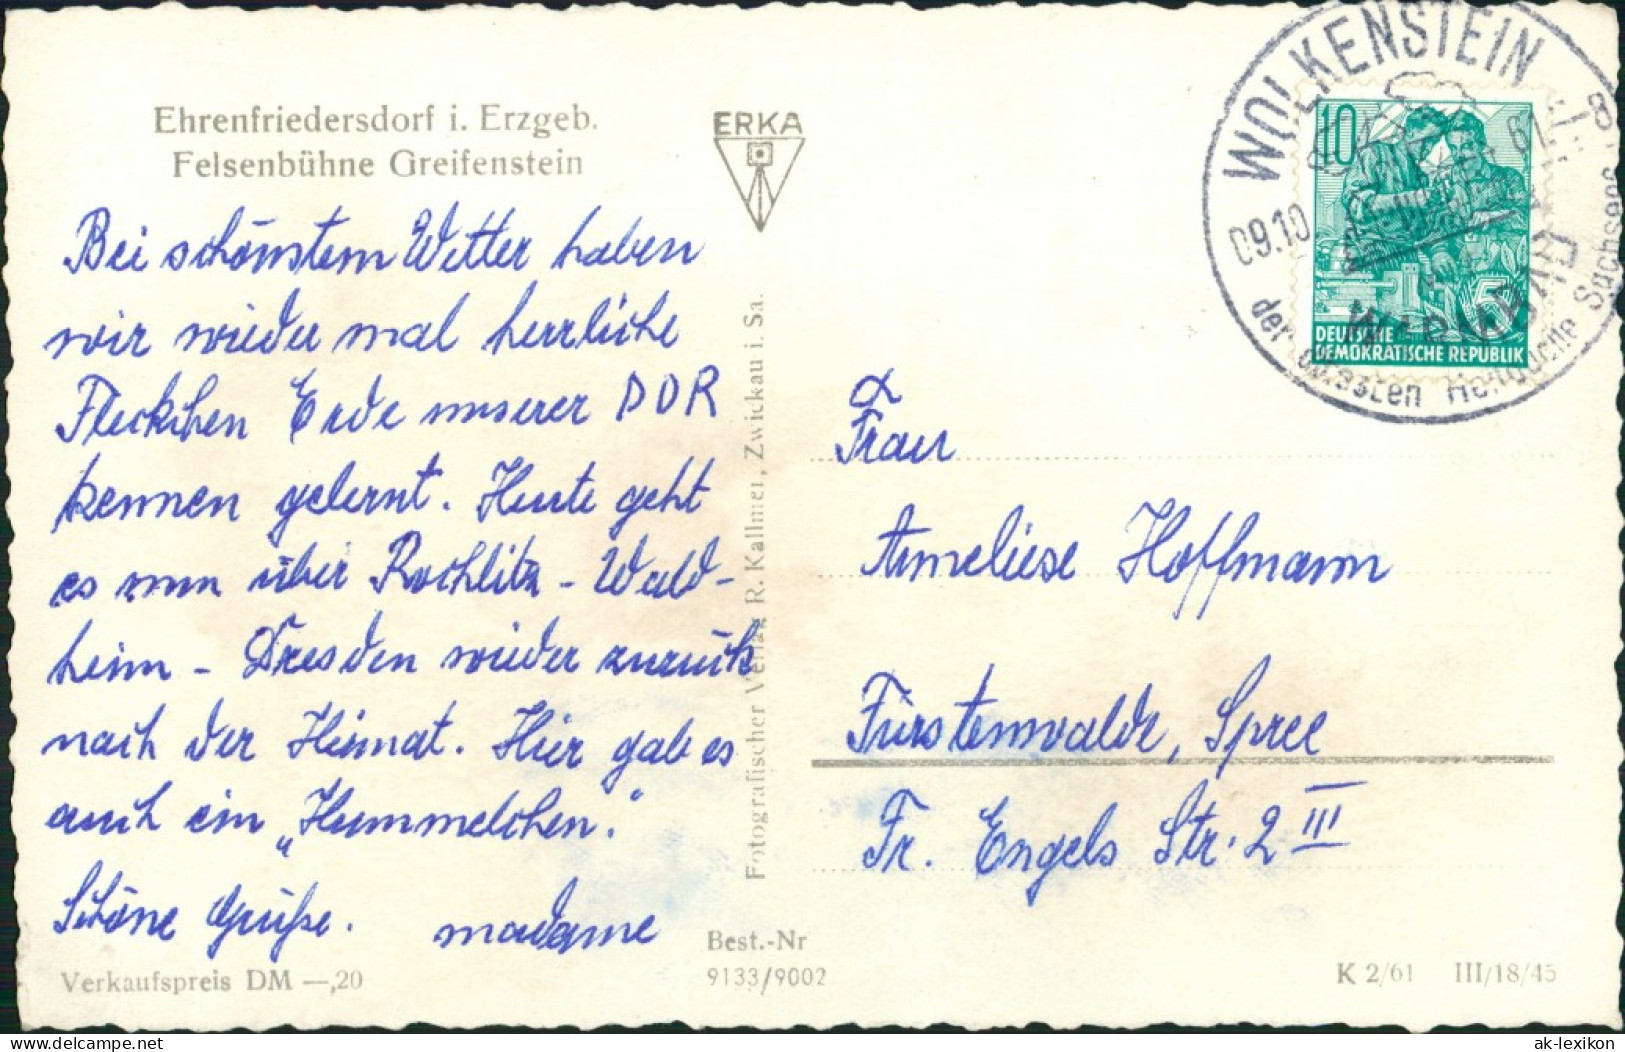 Ehrenfriedersdorf Greifensteingebiet Felsenbühne Greifenstein DDR Postkarte 1961 - Ehrenfriedersdorf